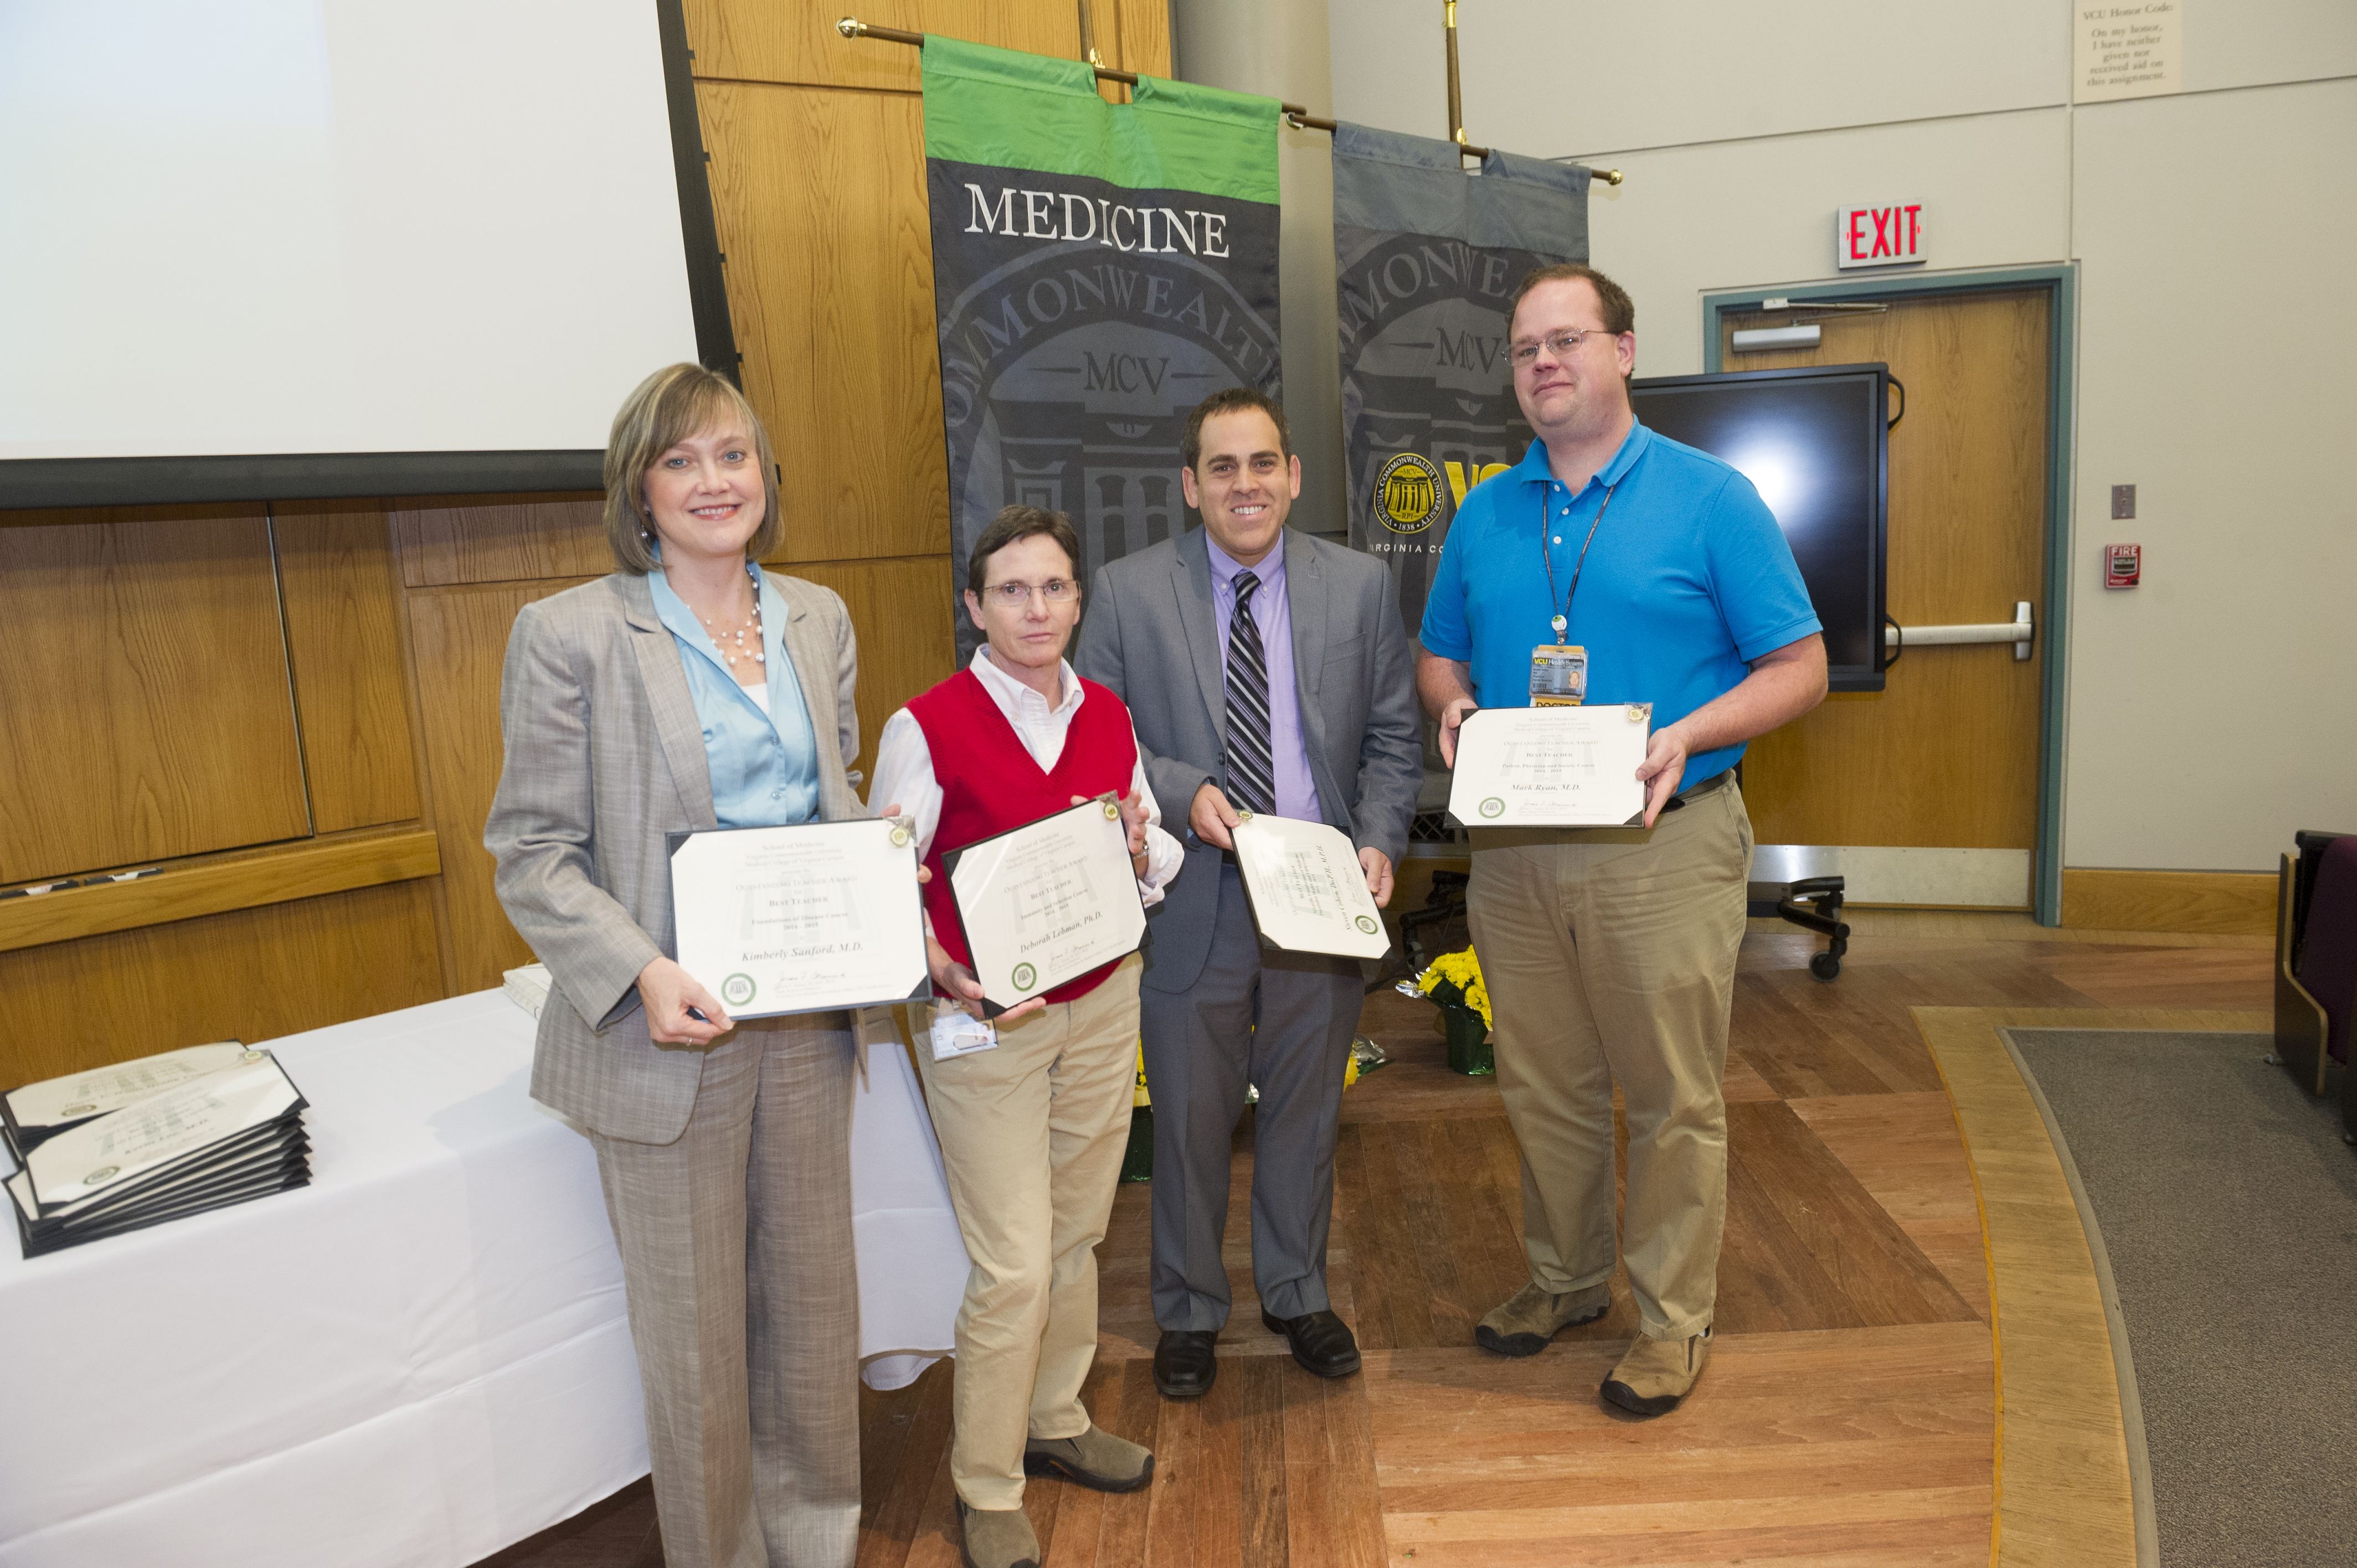  Faculty Excellence Awards 2015 